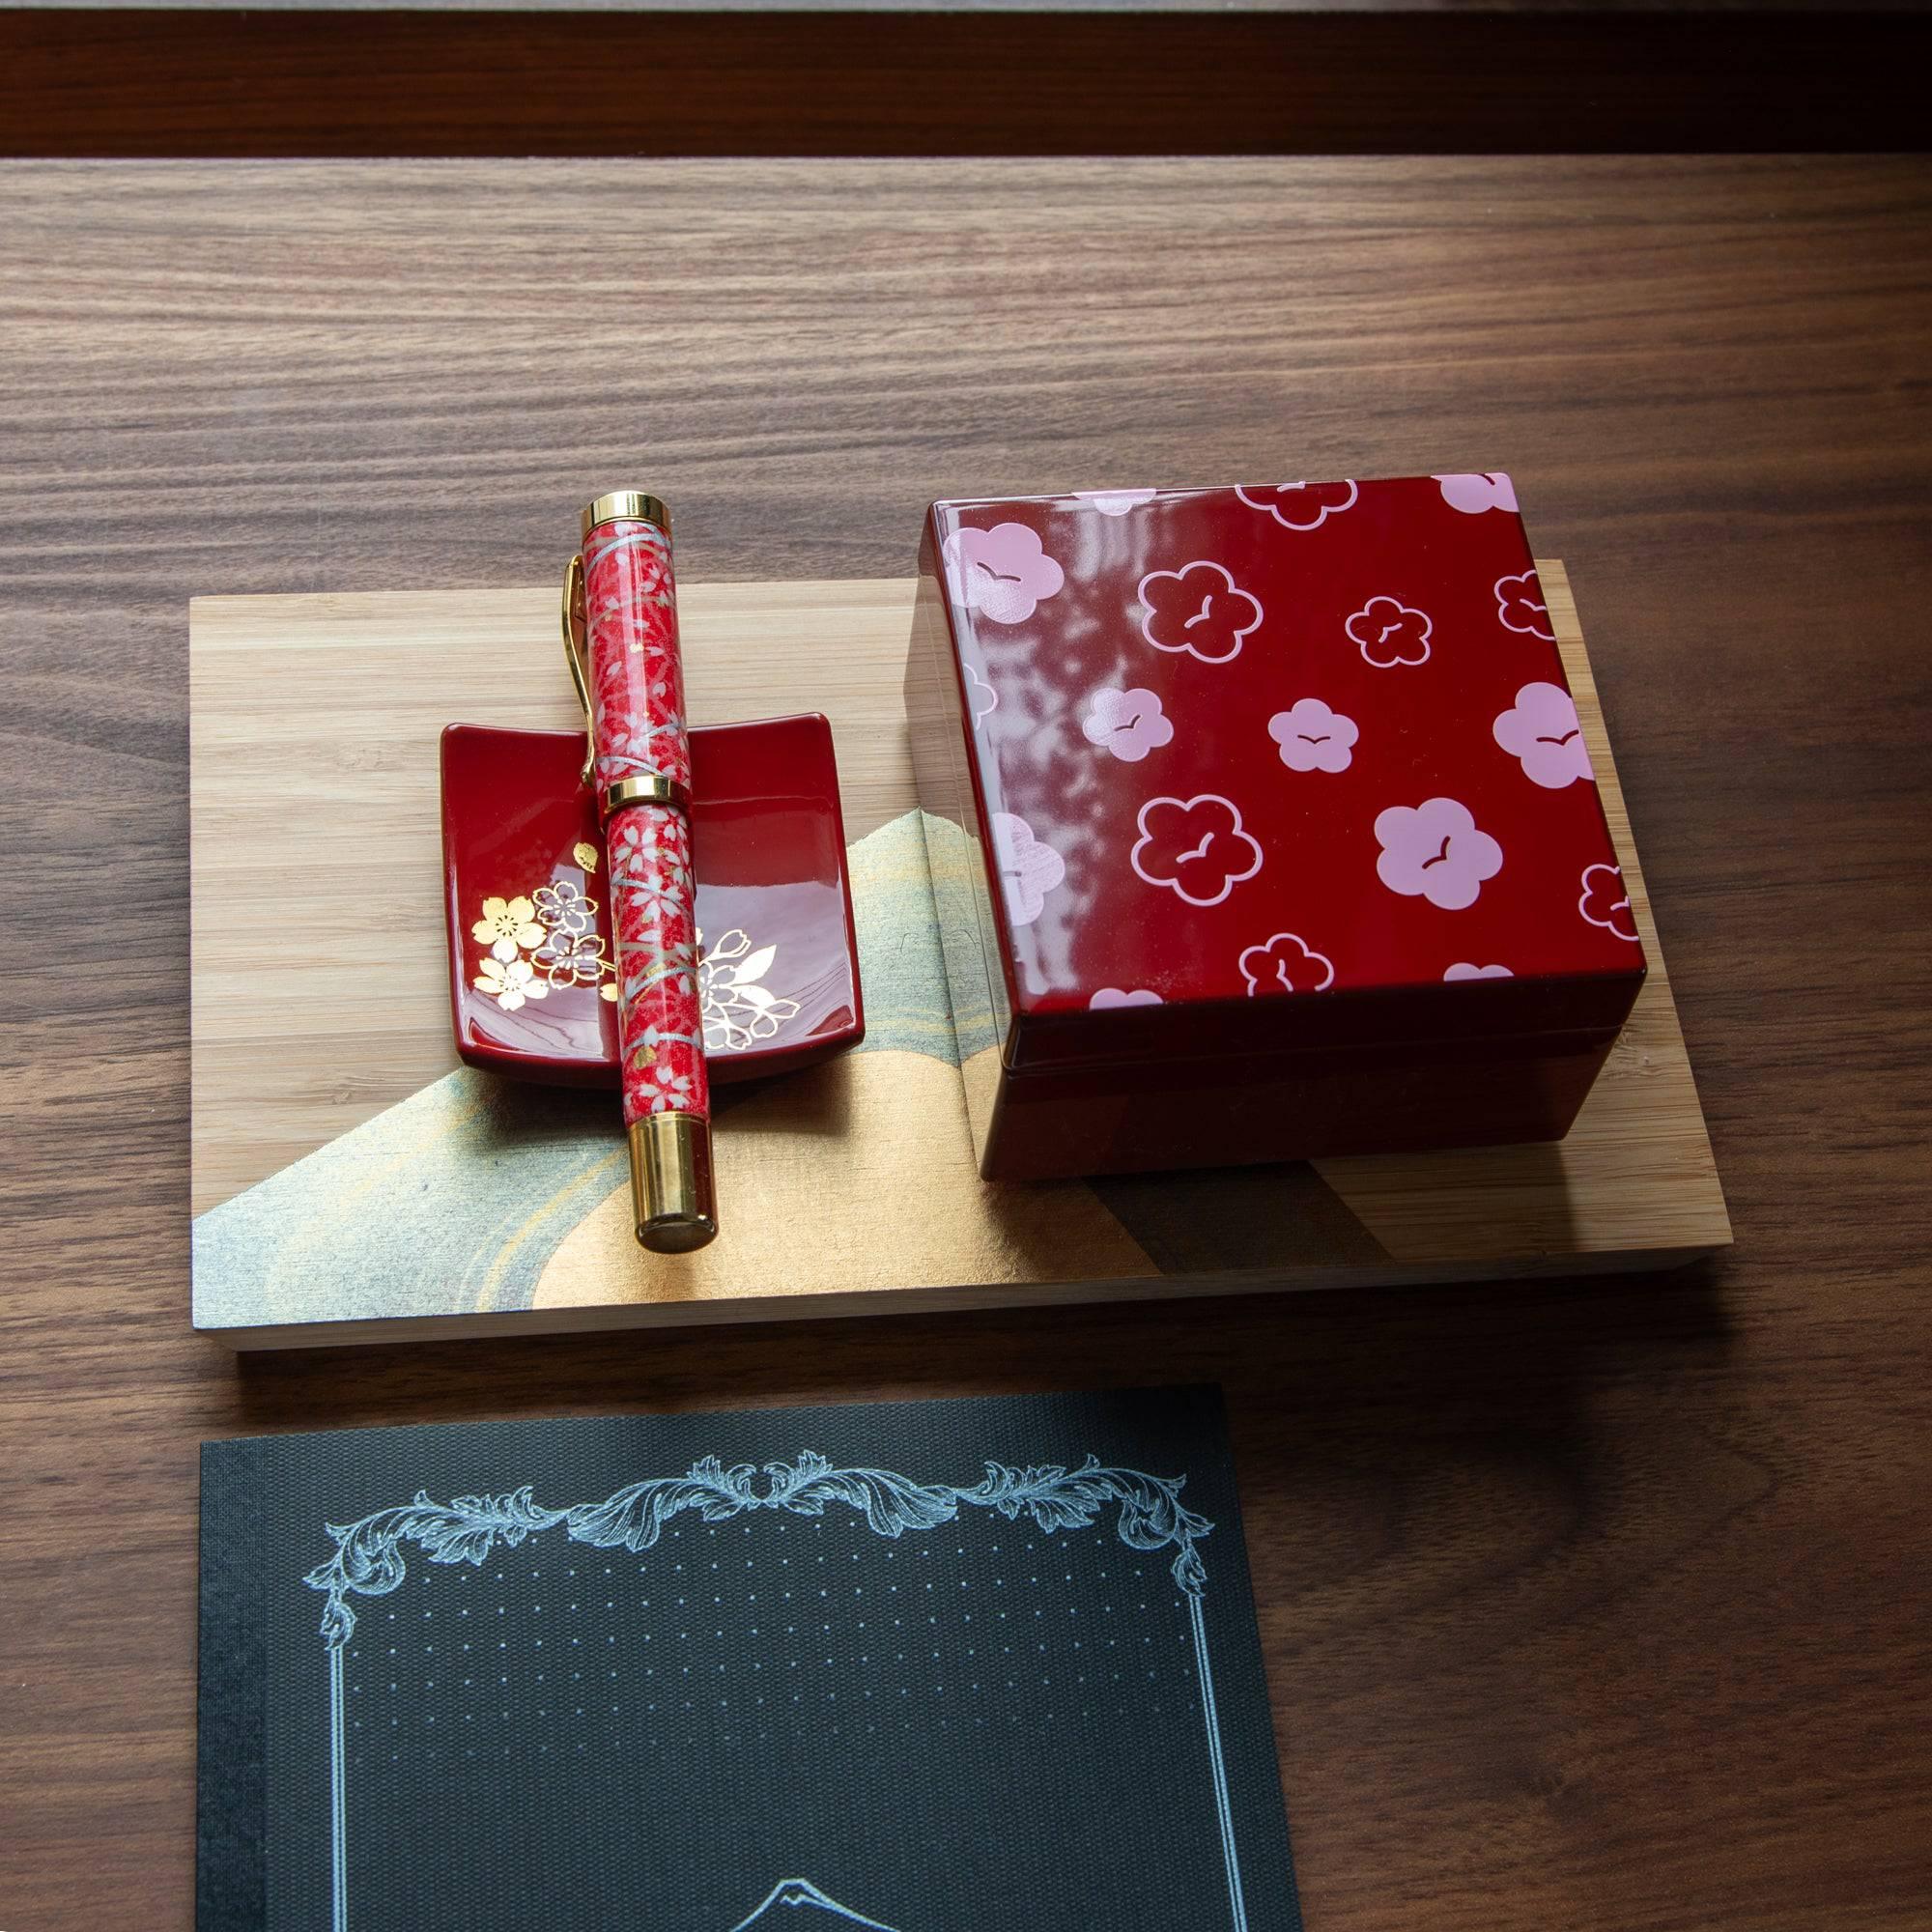 Urushi Kohako Plum Lacquer Trinket Box - Komorebi Stationery